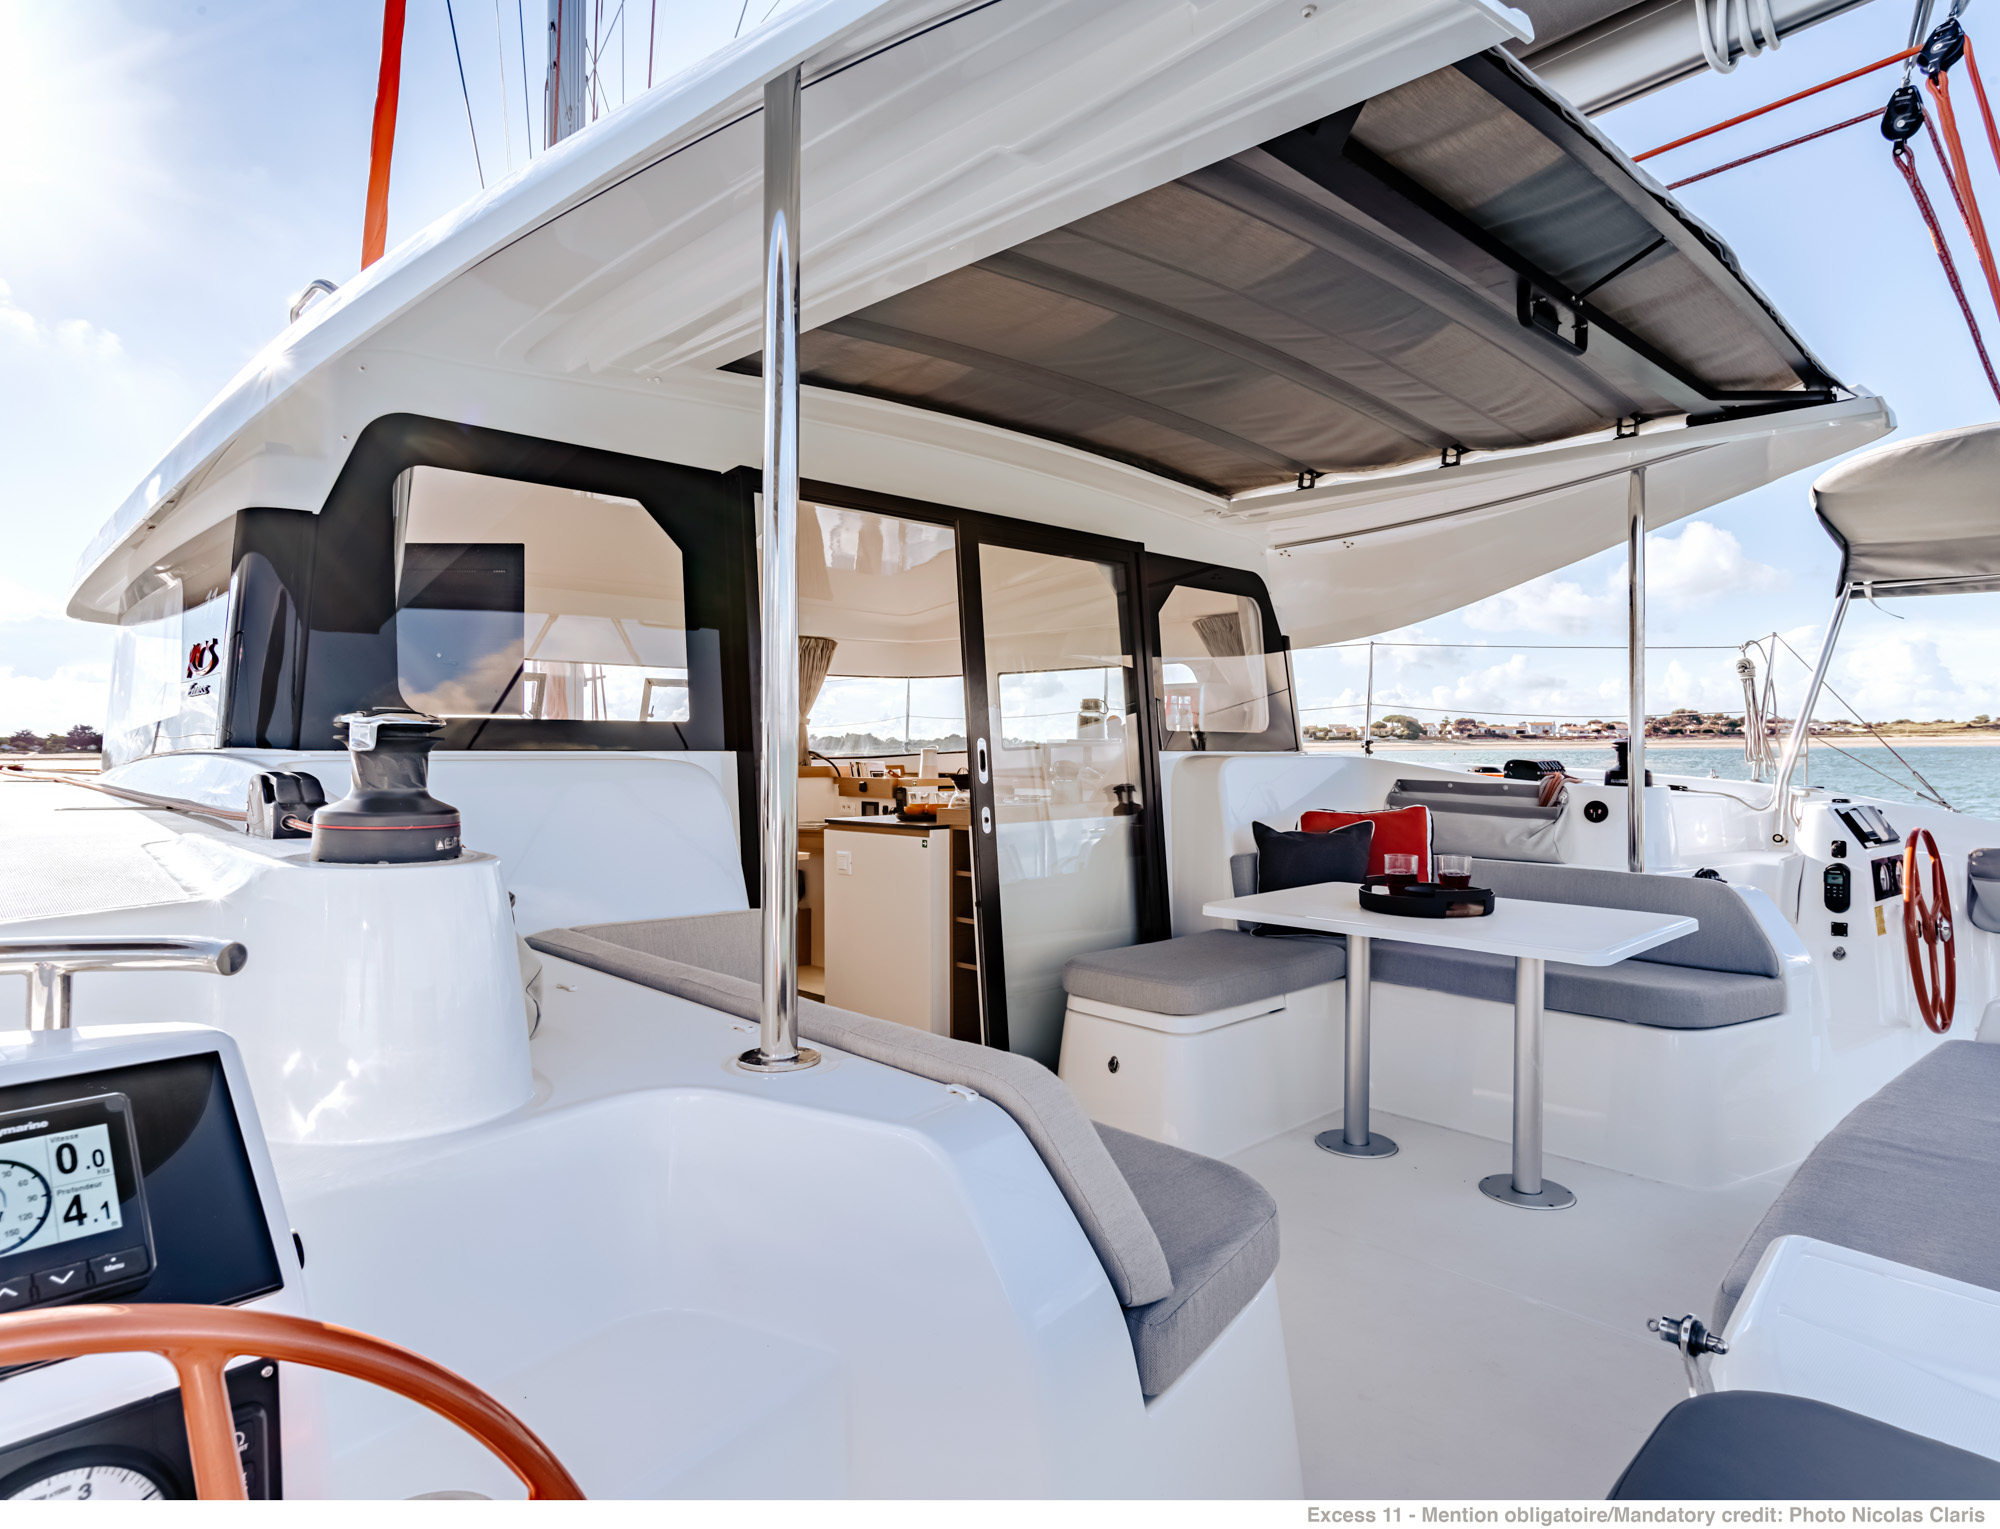 Excess 11 - Yacht Charter Procida & Boat hire in Italy Procida Marina di Procida 2